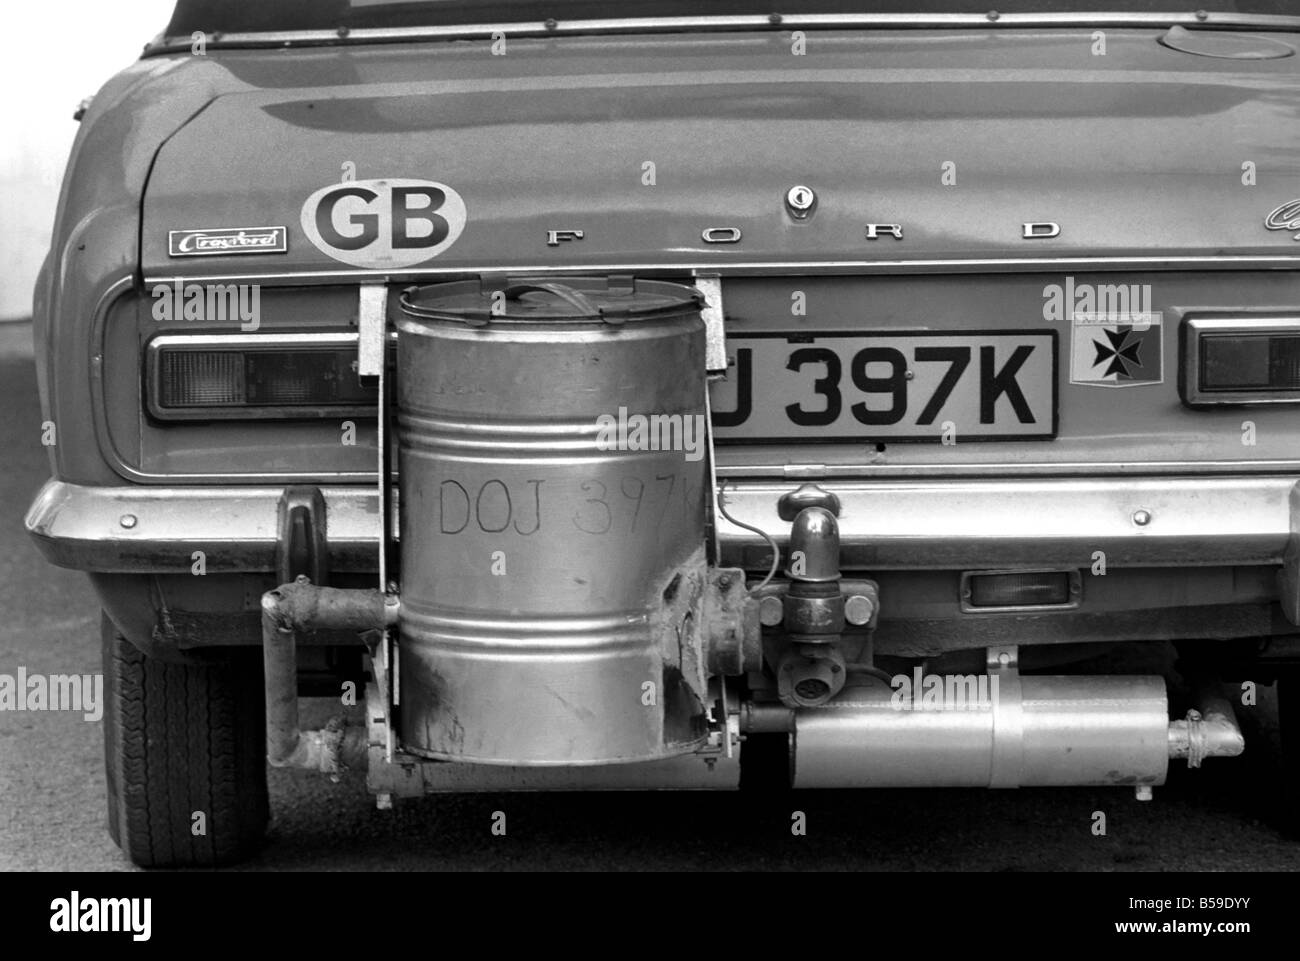 Mr. Douglas Purser's Ford 1600 cc Capri on coal. February 1975 75-01164-001 Stock Photo